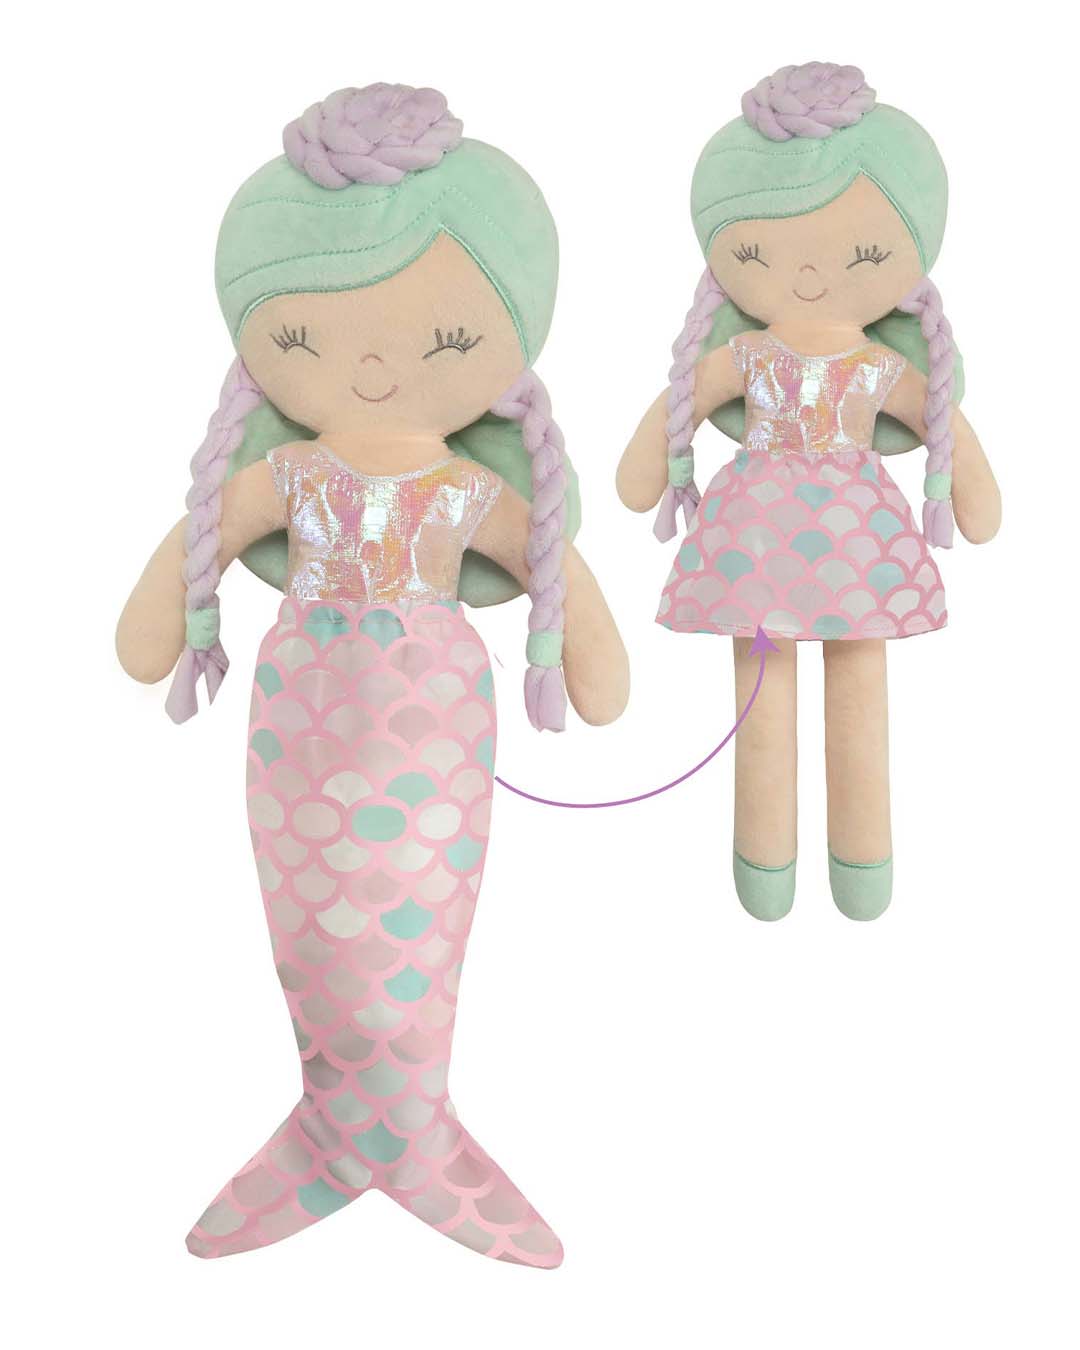 Mermaid Doll - Ocean Fantasy